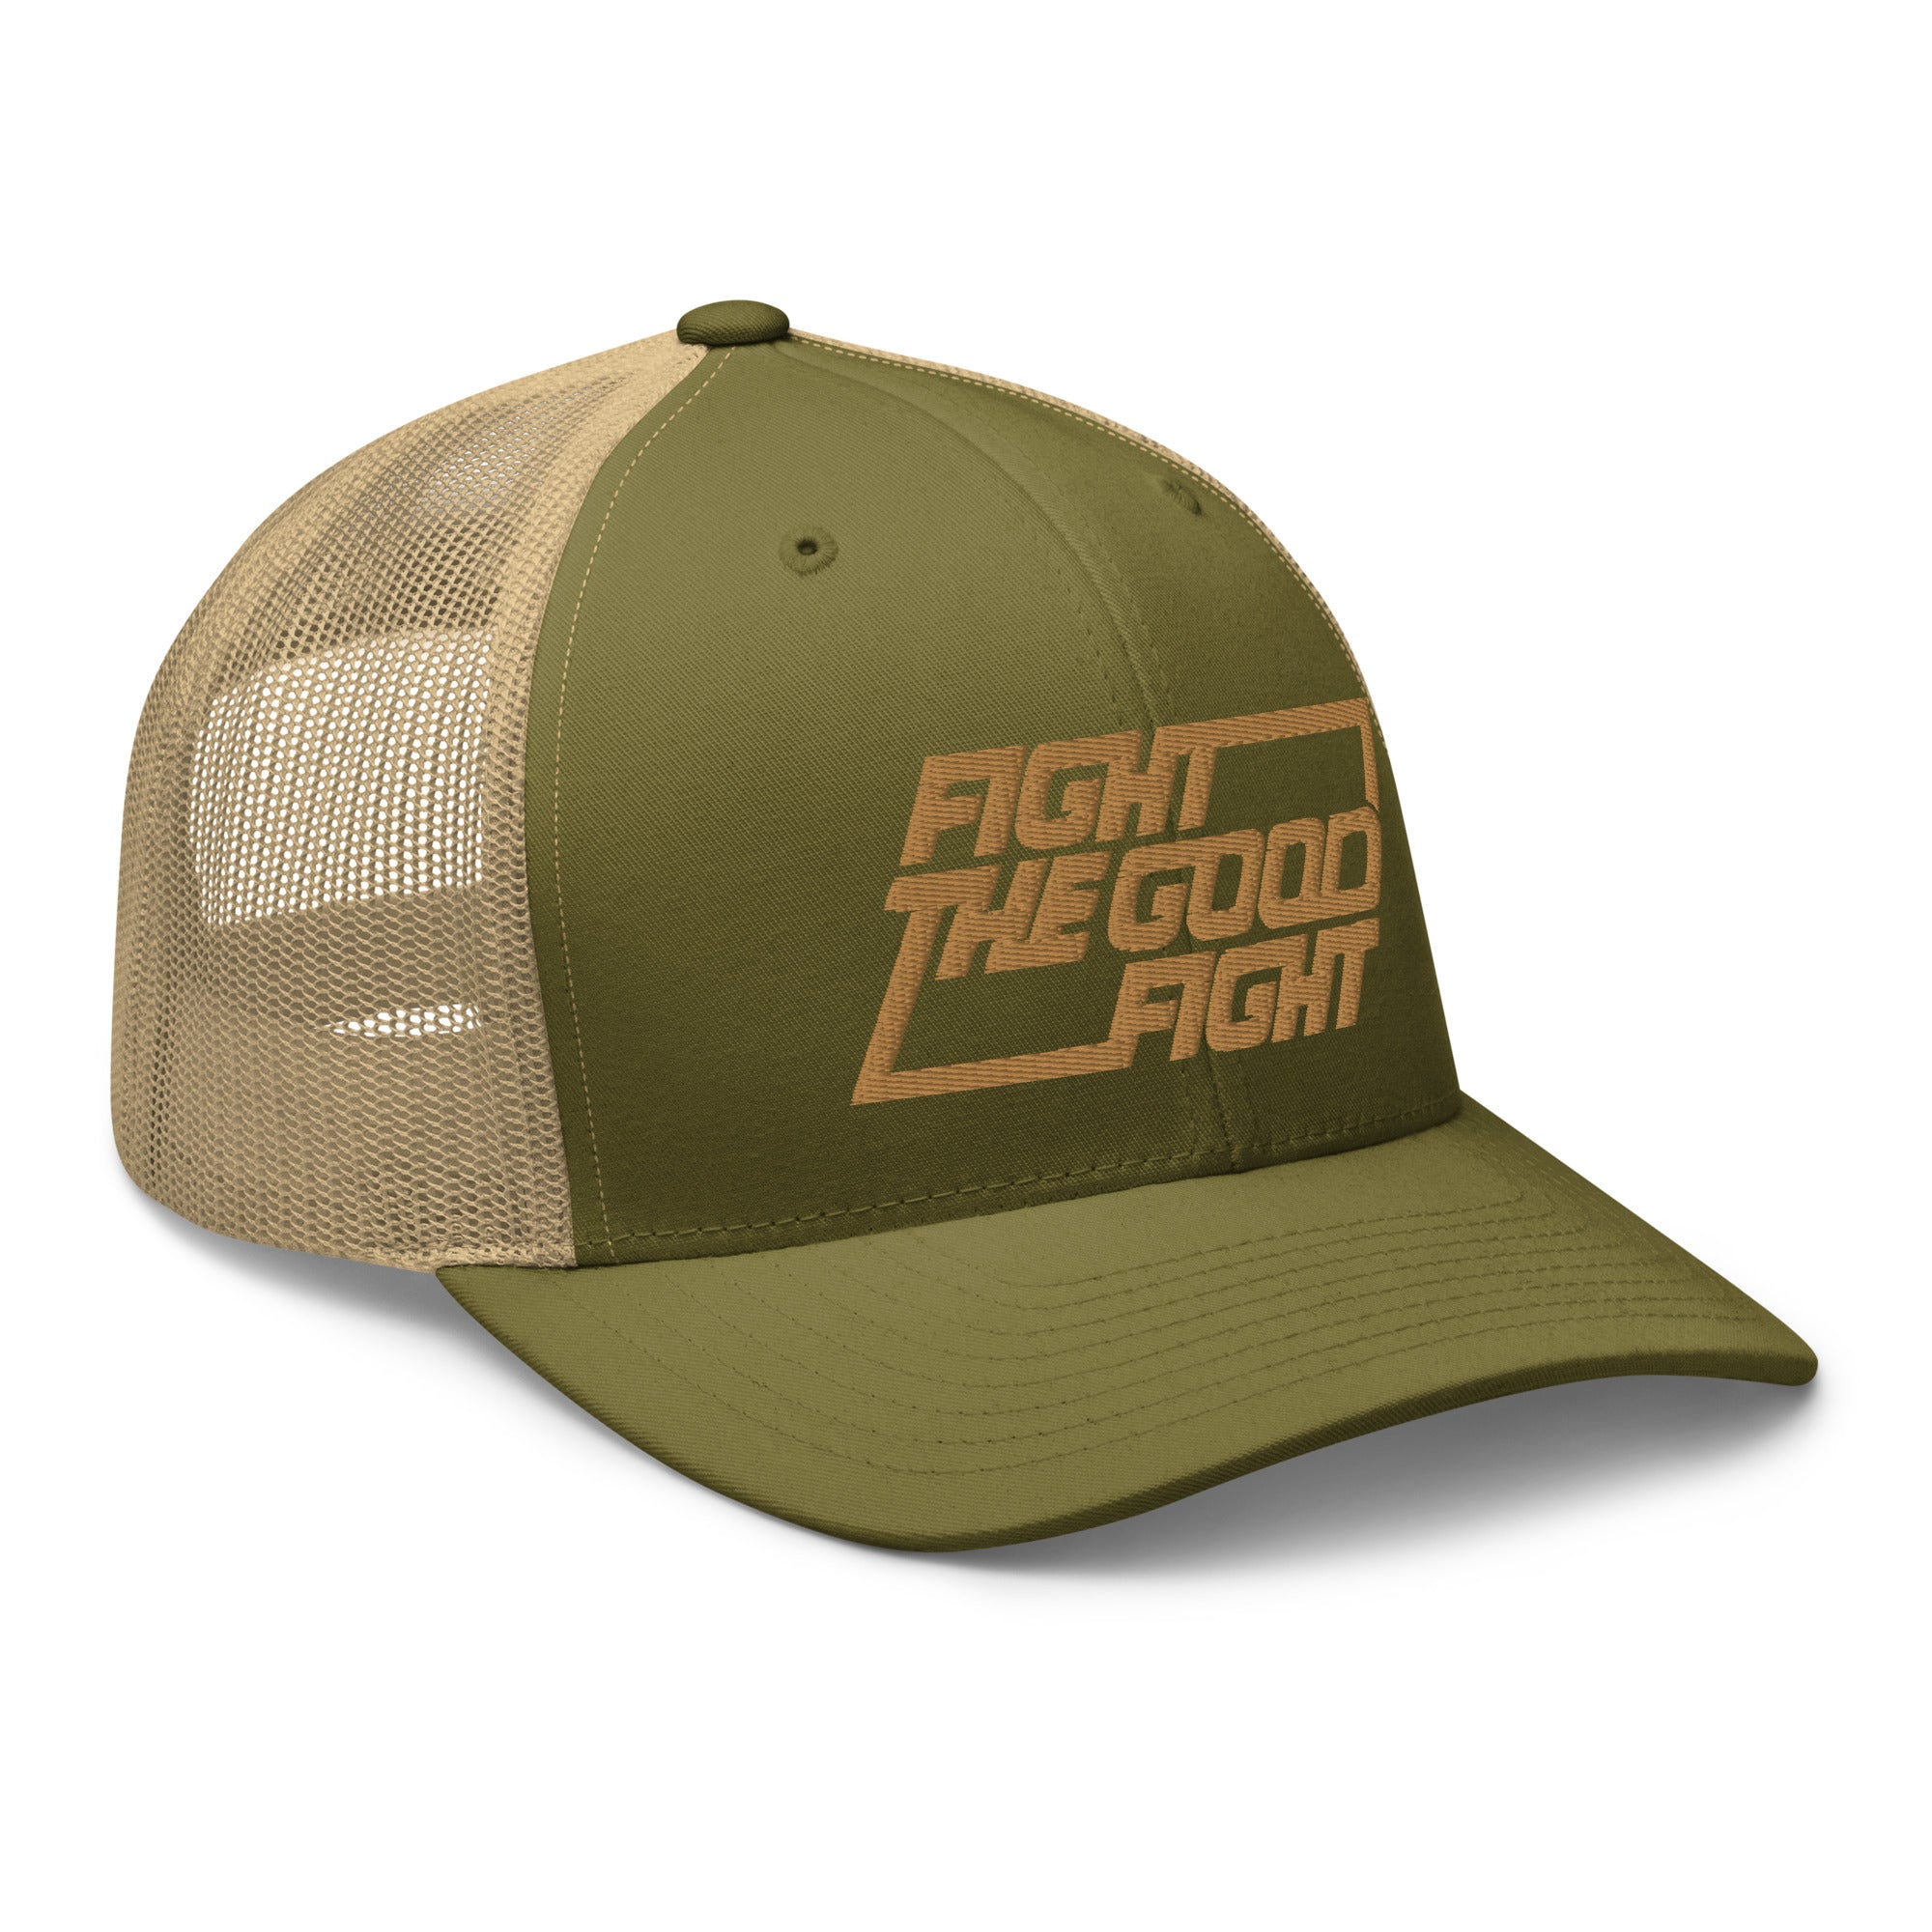 Fight the Good Fight Trucker Cap